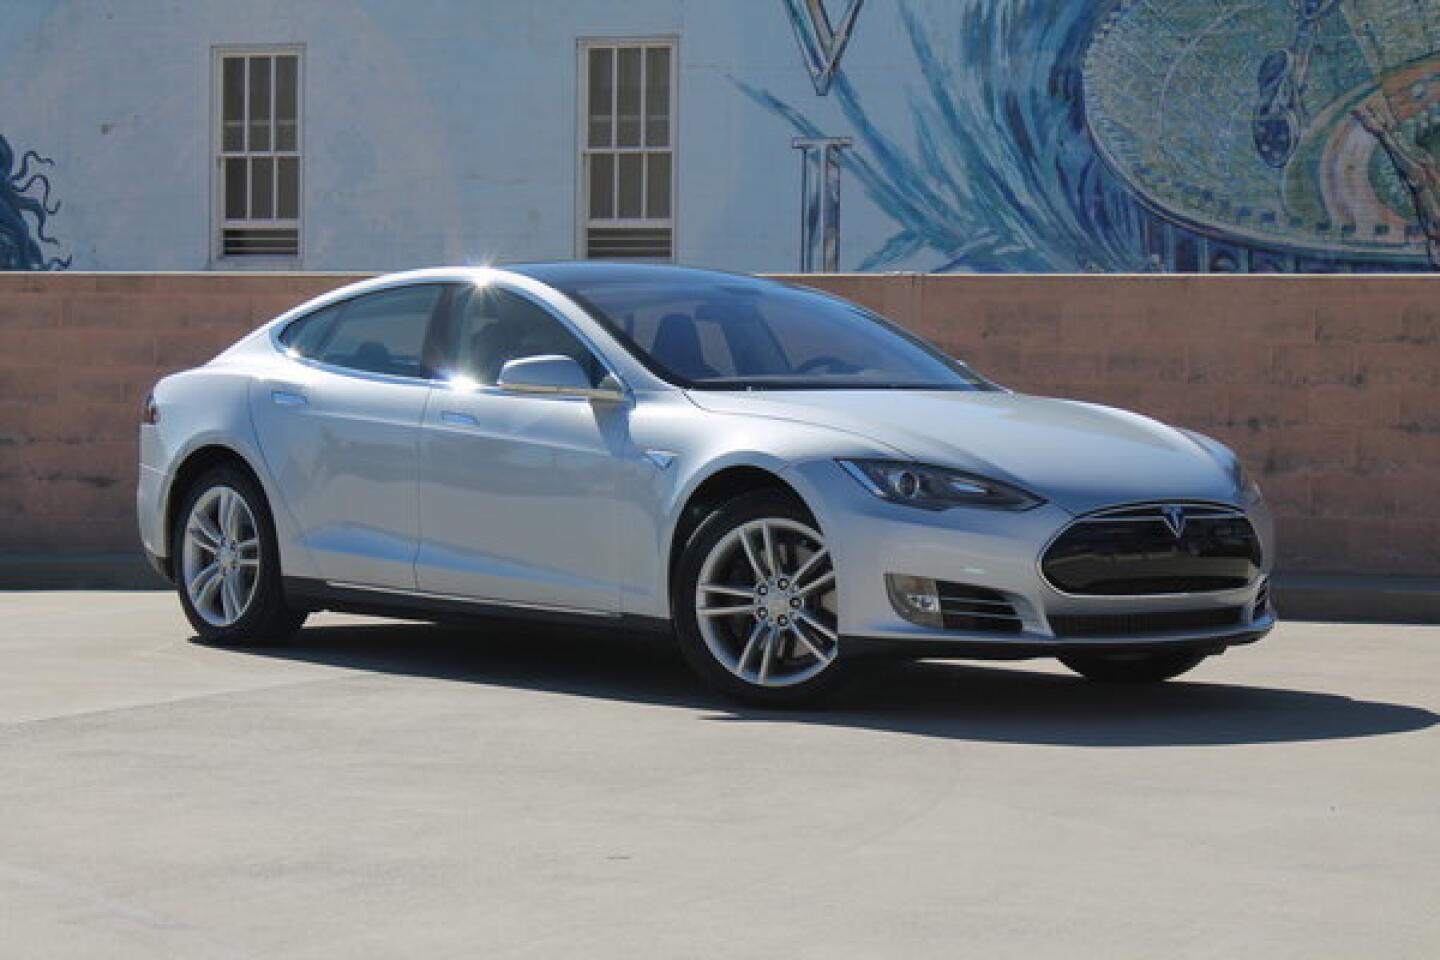 Times Test Garage: Details On The Tesla Model S - Los Angeles Times